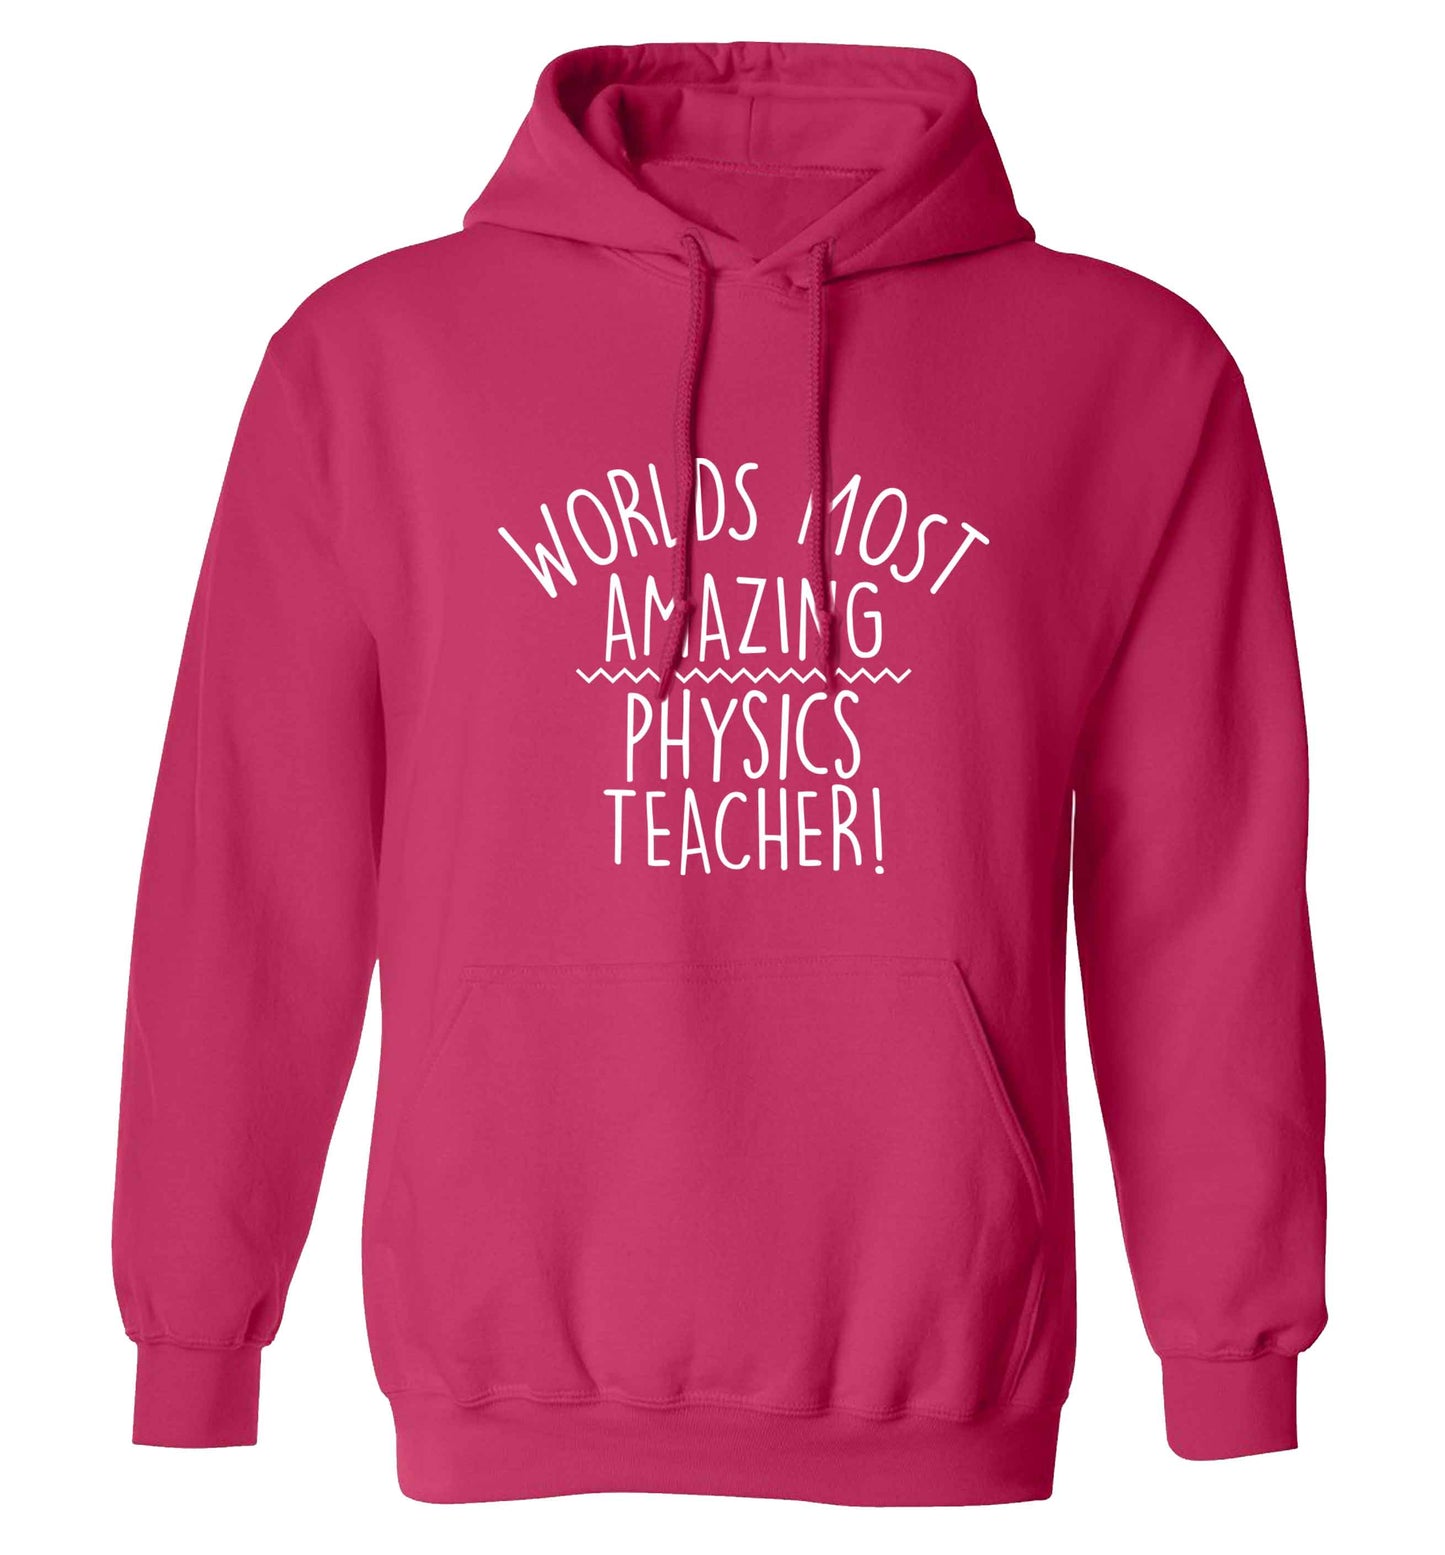 Worlds most amazing physics teacher adults unisex pink hoodie 2XL